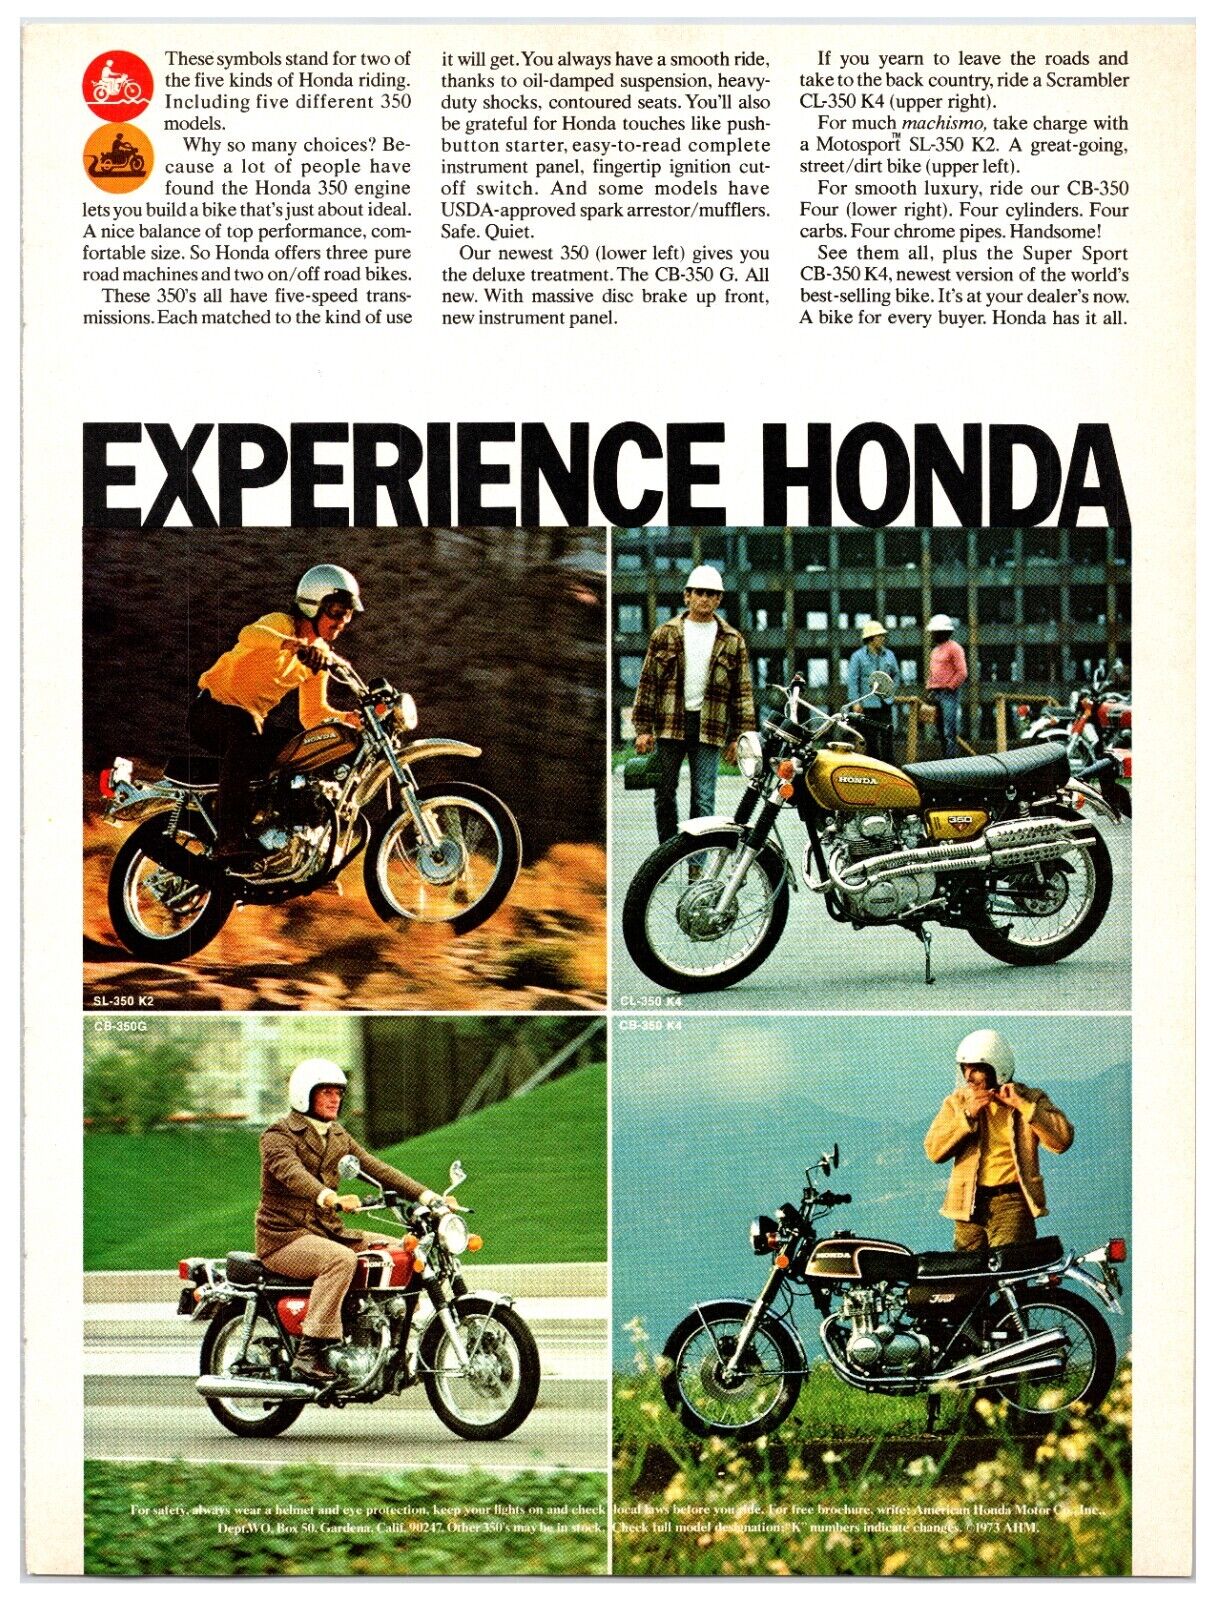 1973 Honda SL-350 / CB-350 Motorcycle - Original Print Advertisement (8x11)